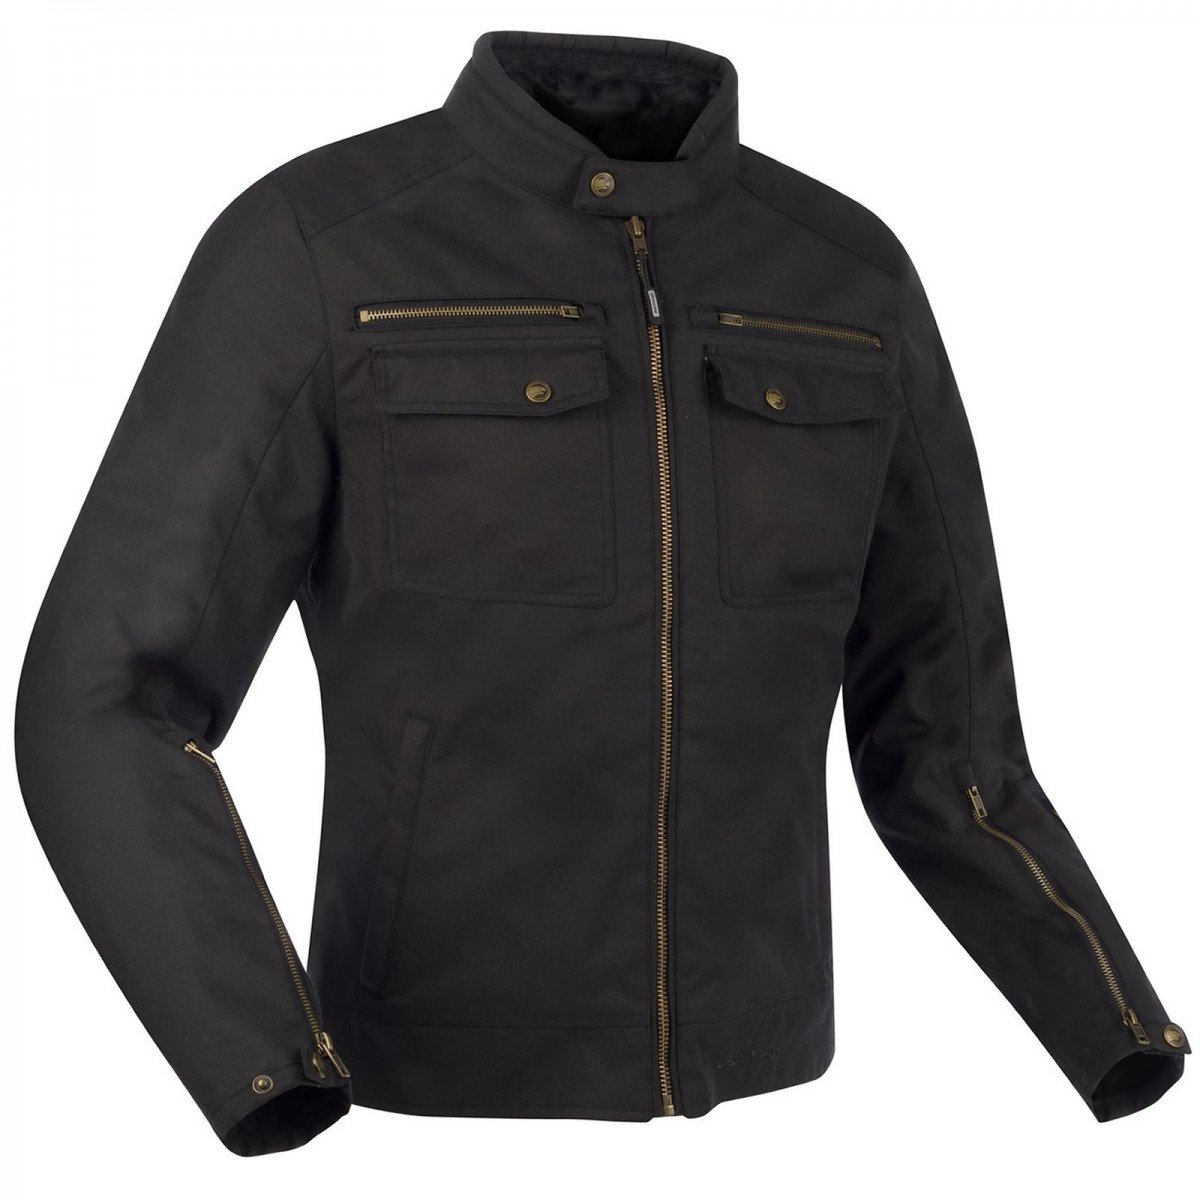 Image of Bering Winton Jacket Black Size XL ID 3660815161951